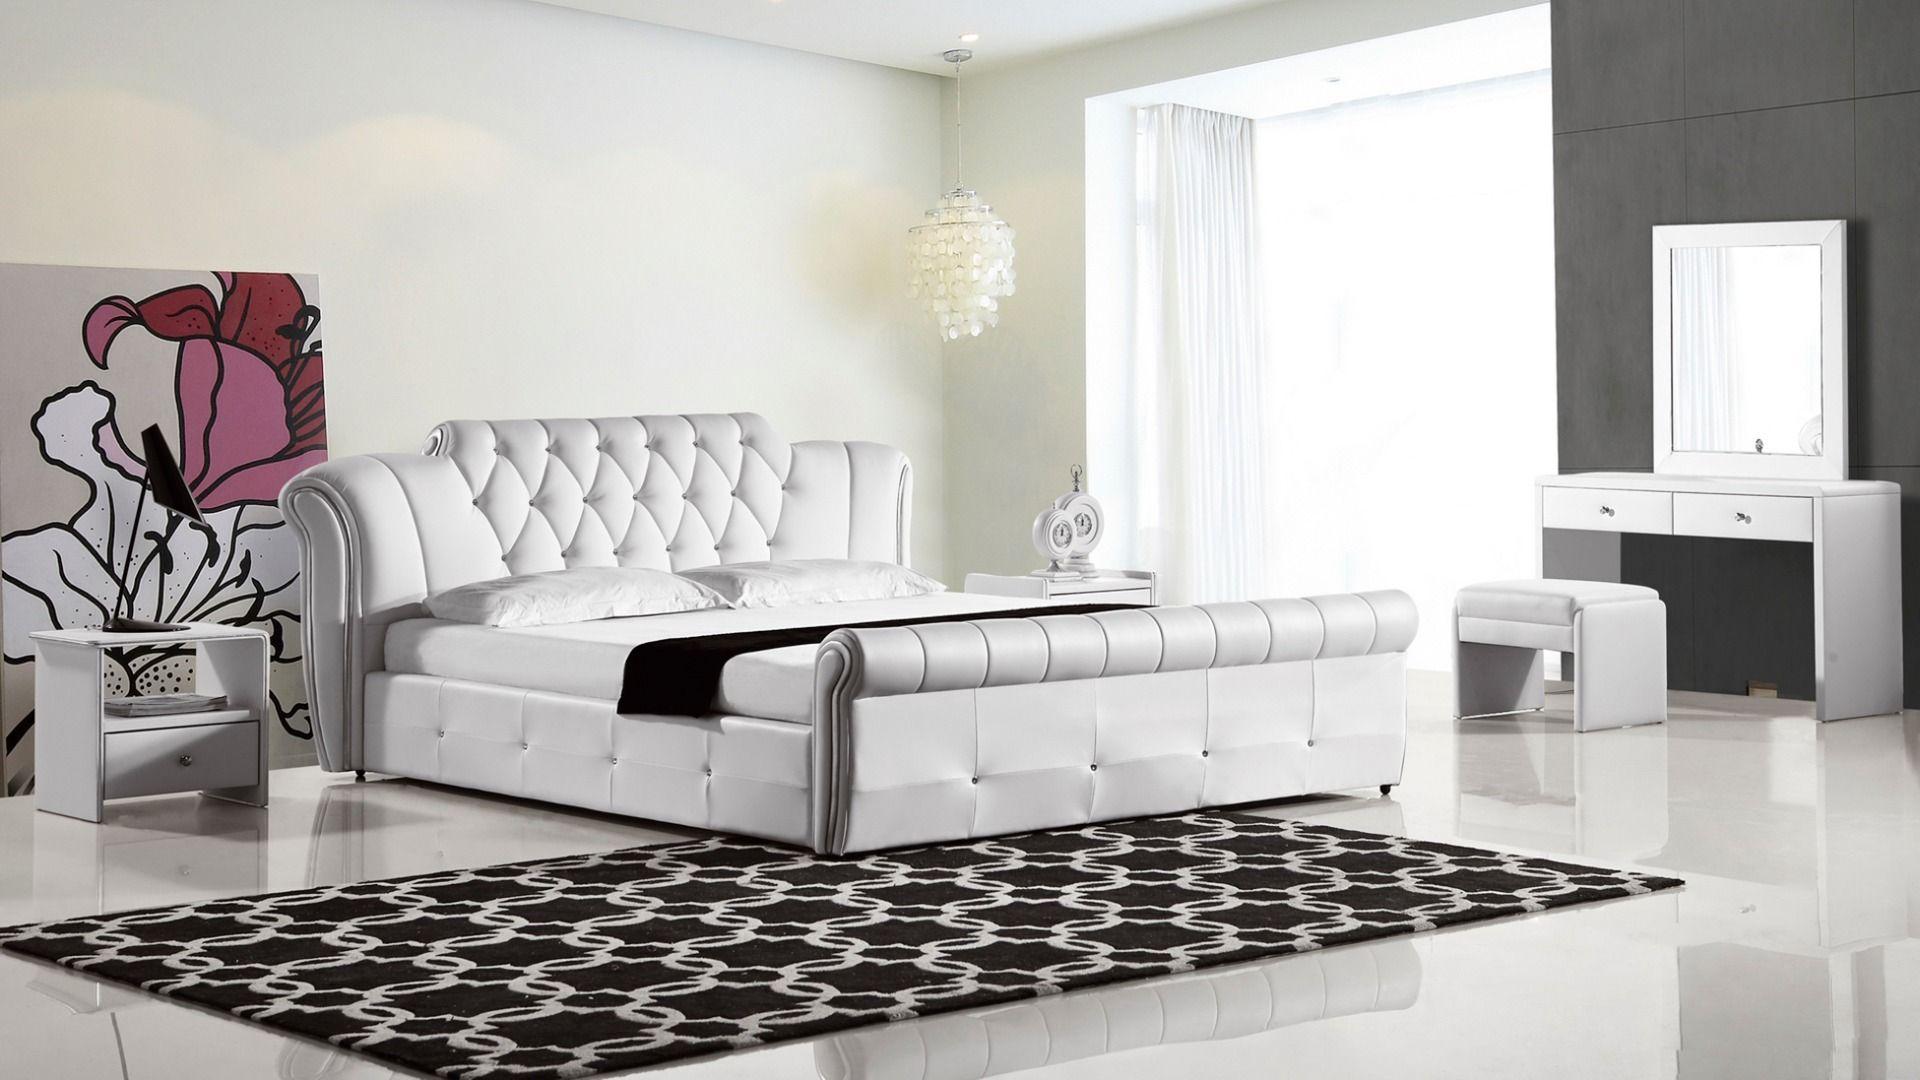 

    
American Eagle Furniture B-D032-W-Q Platform Bed White B-D032-W-Q
